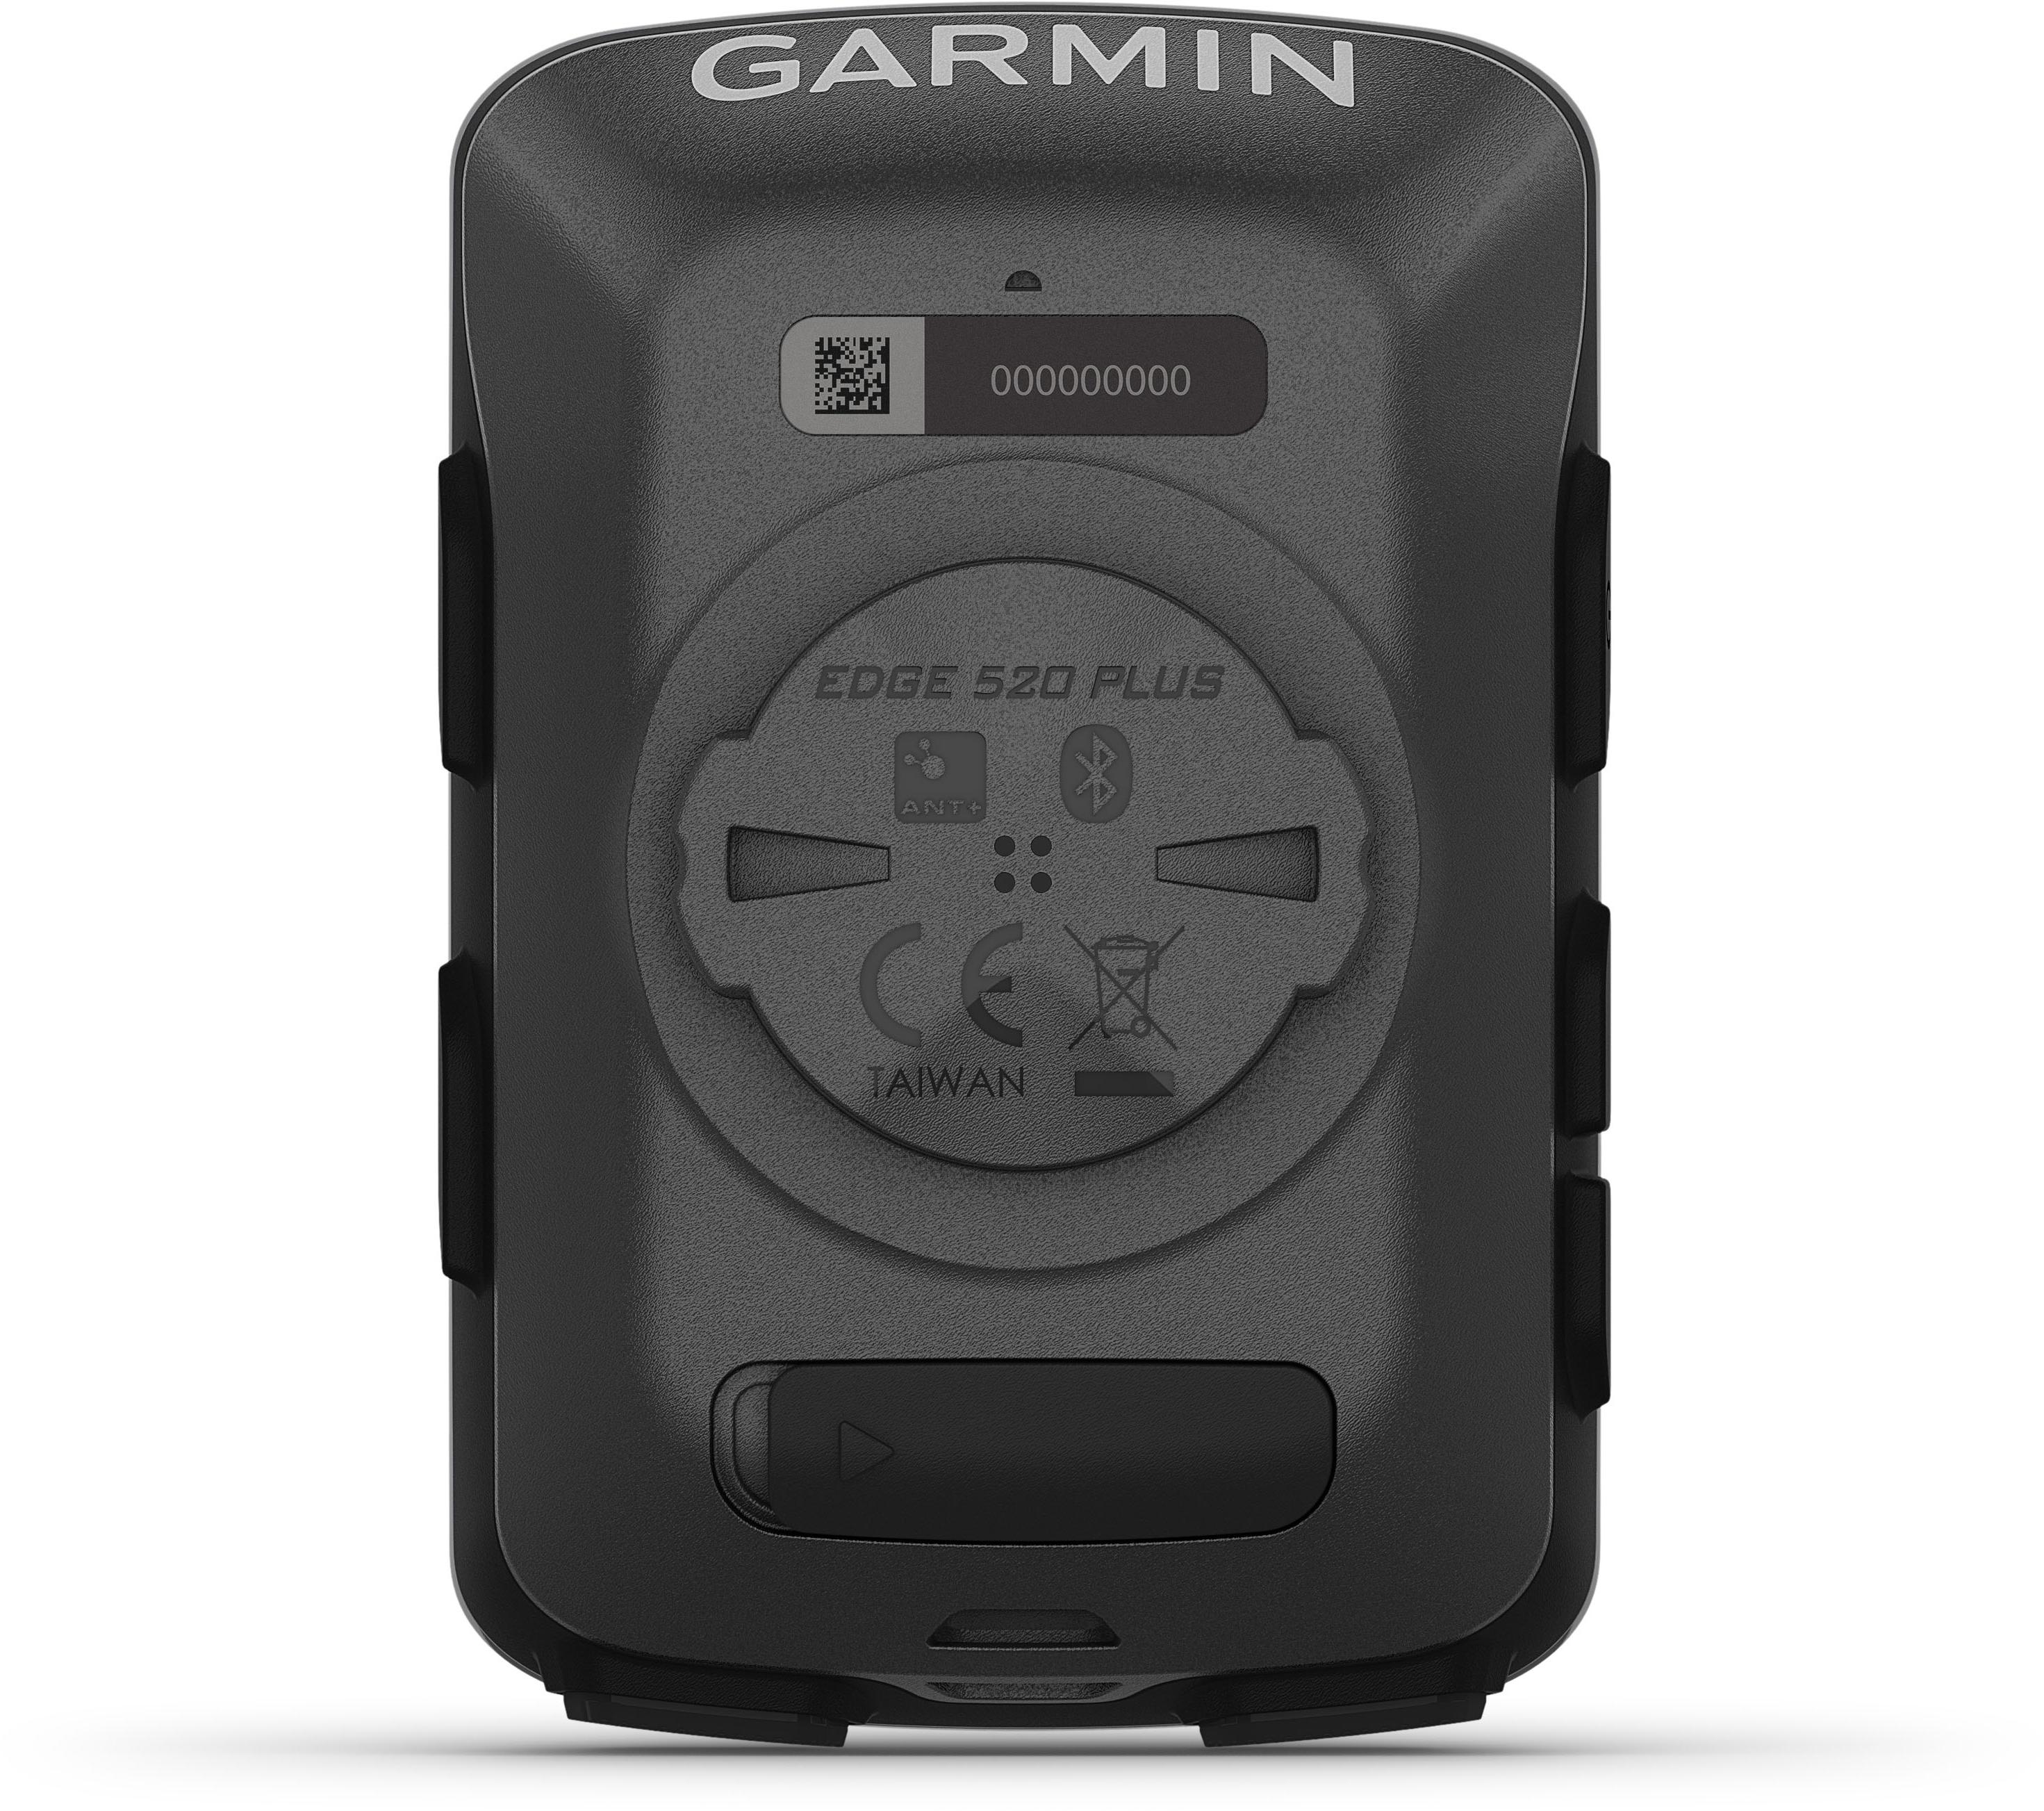 garmin 520 plus release date